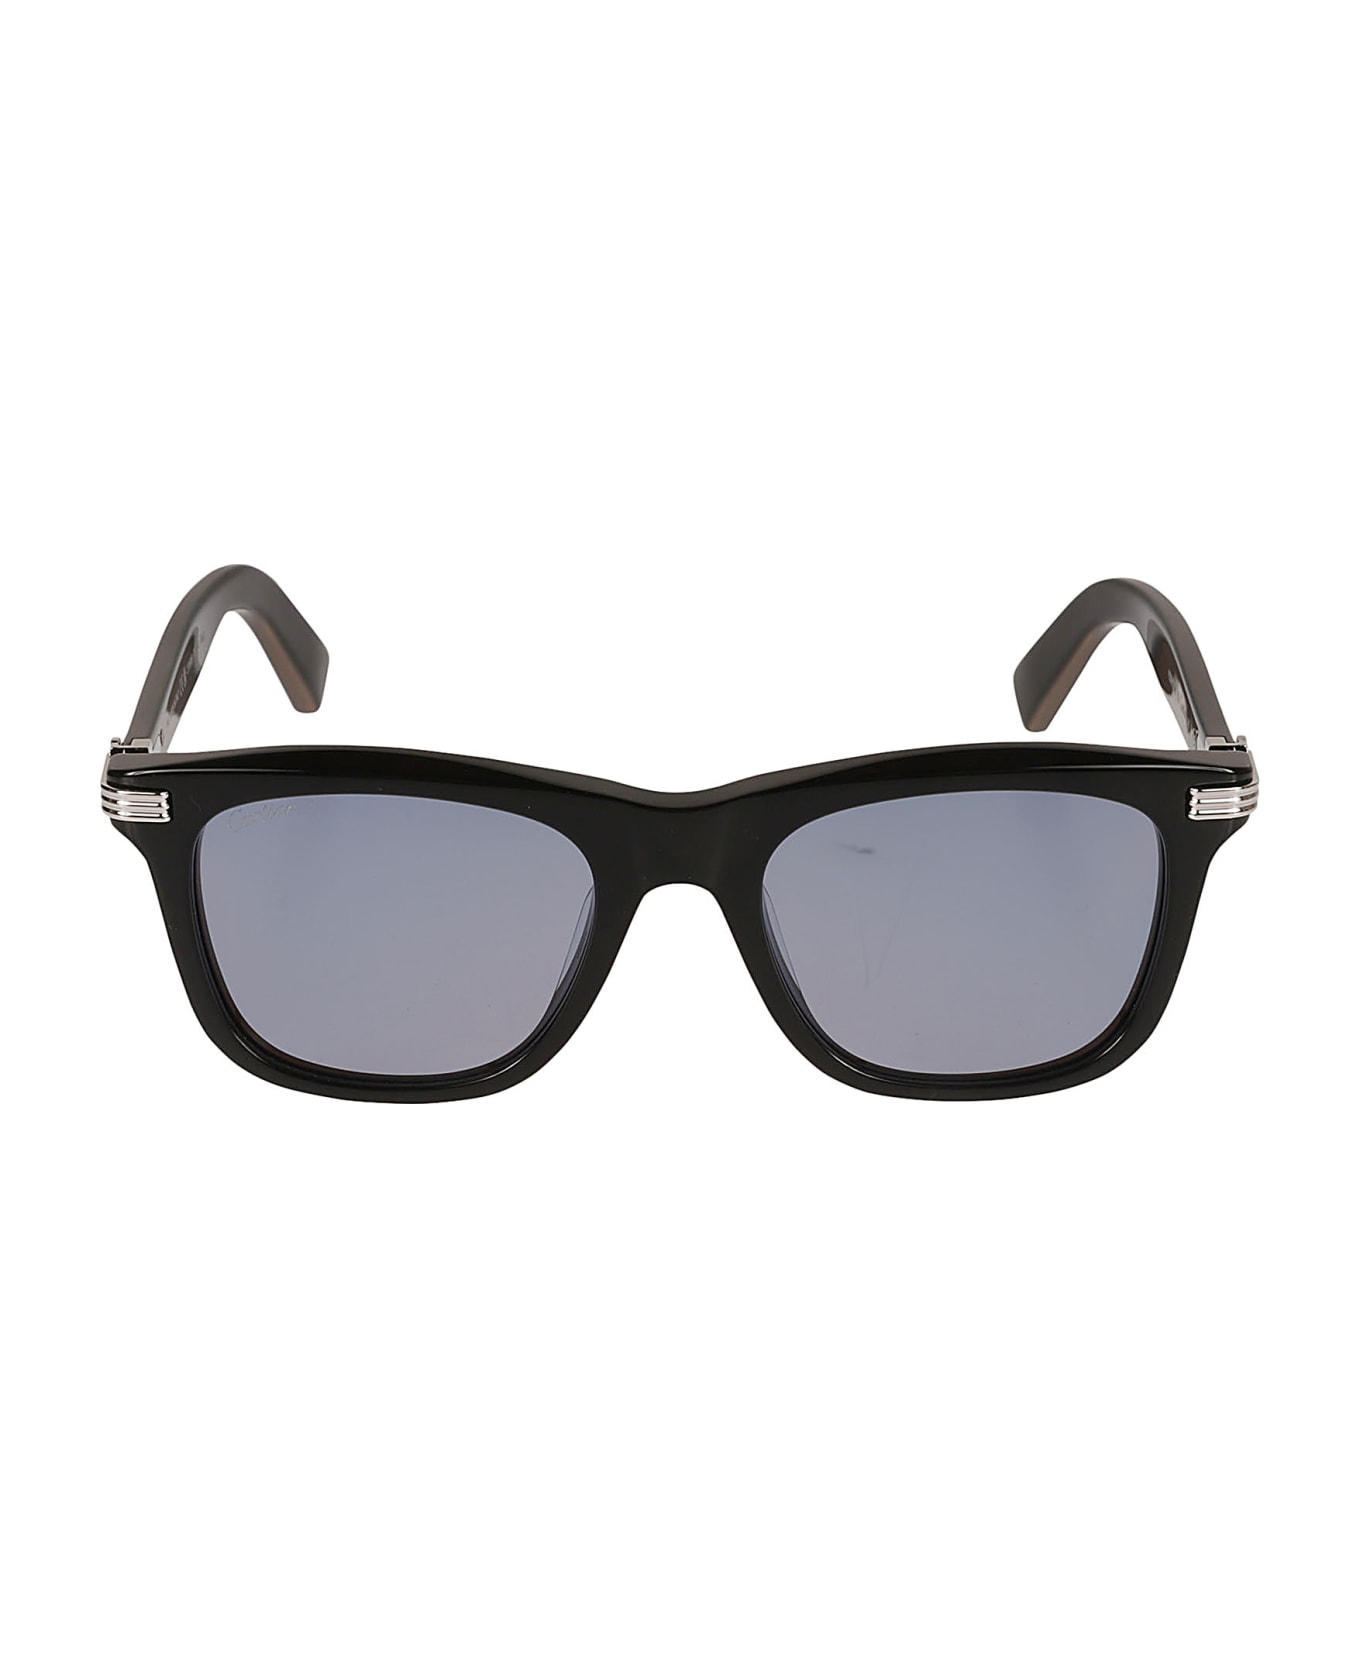 Cartier Eyewear Square Sunglasses - Black/Blue サングラス